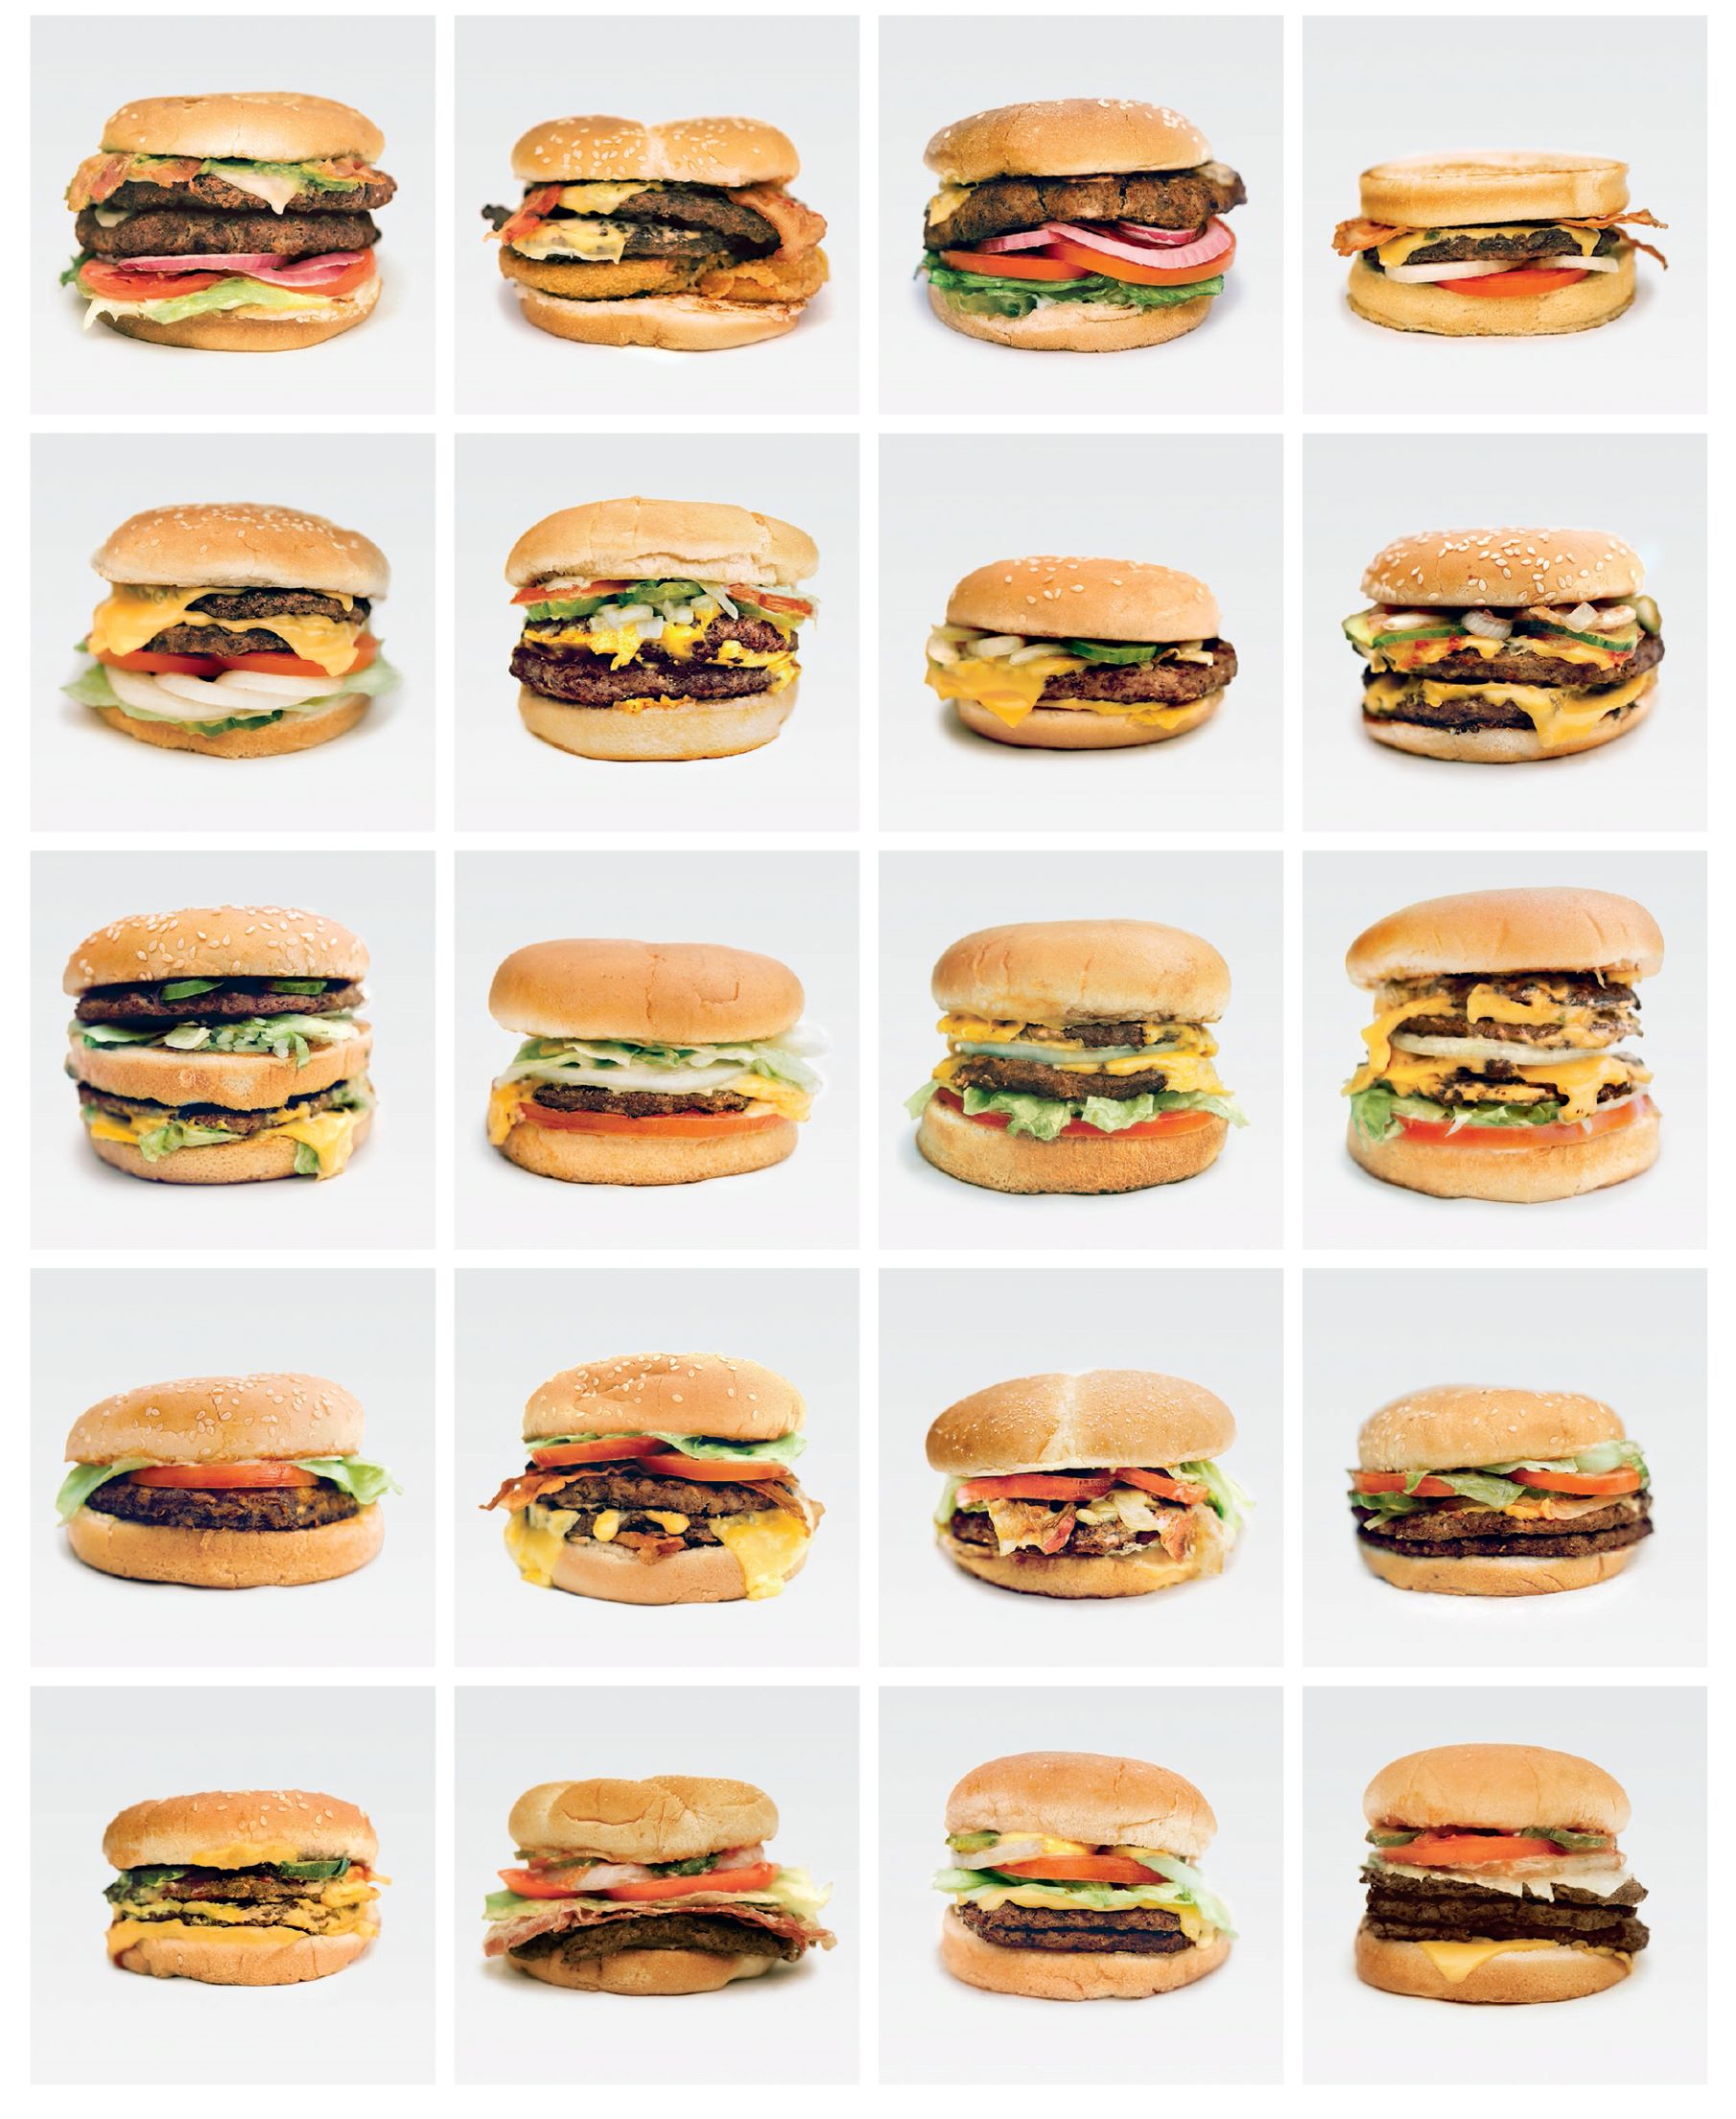 Gallery of Burgers by Jeff Vespa